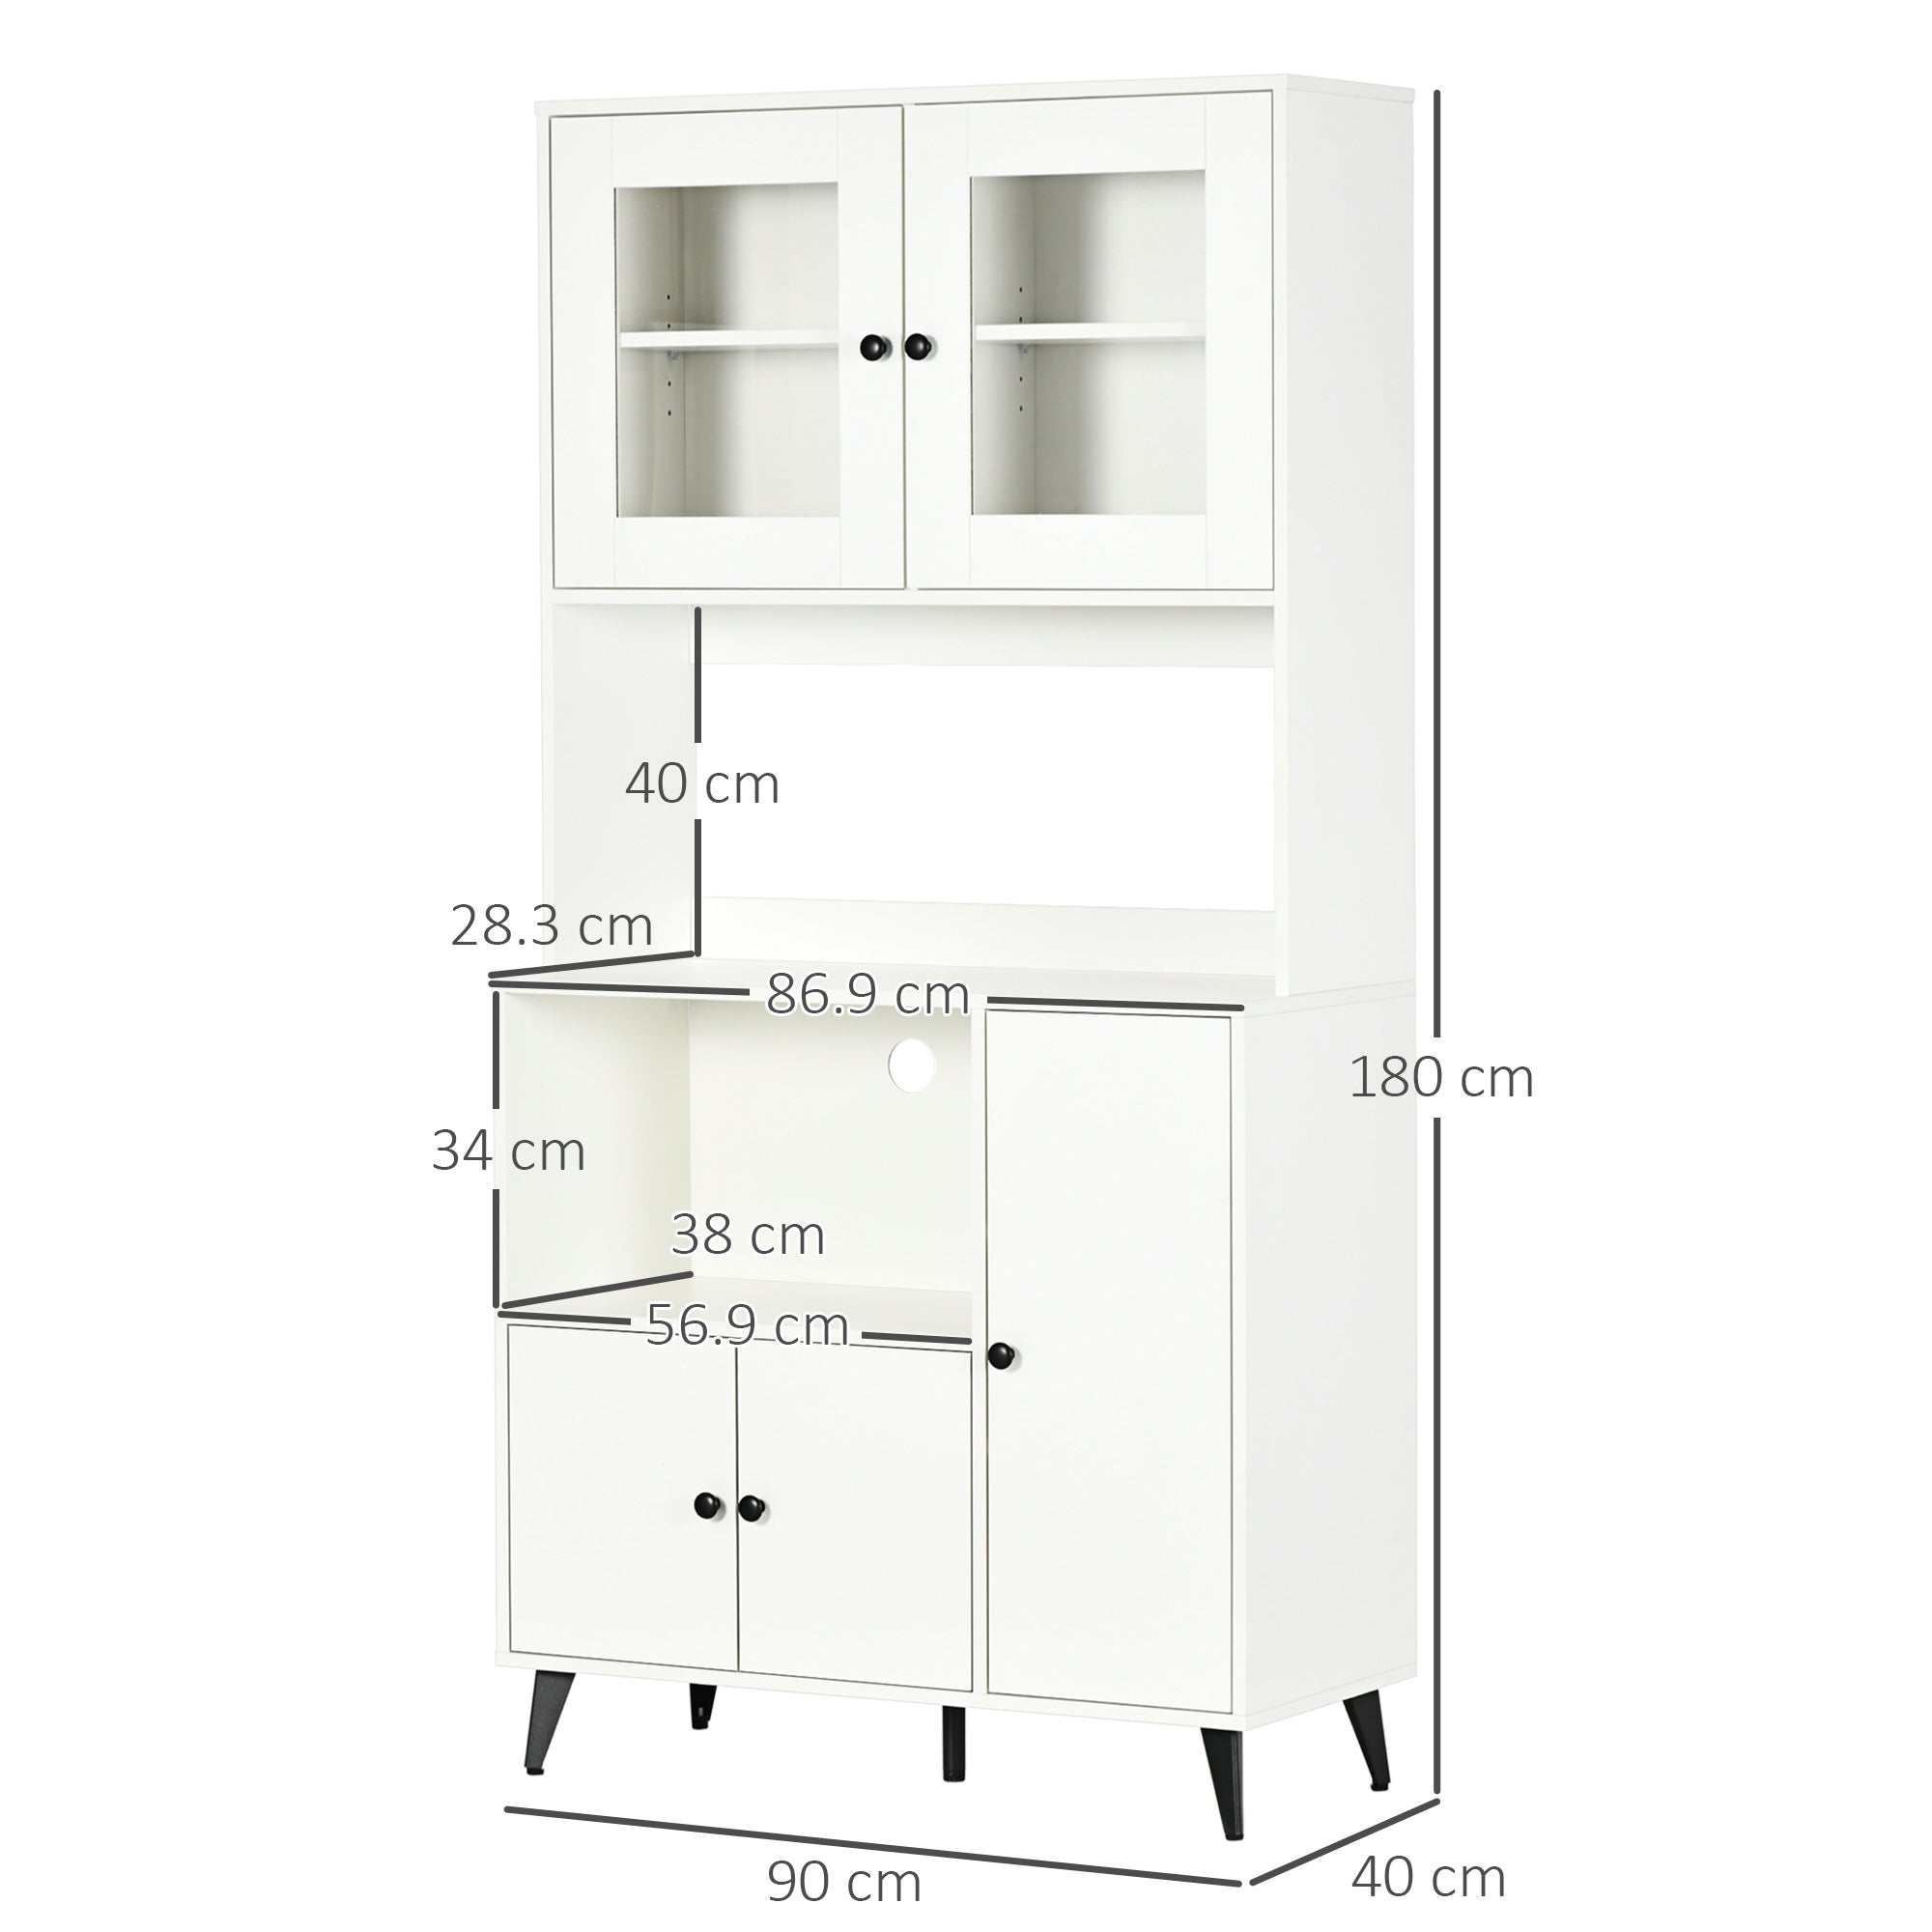 Freestanding Kitchen Cupboard, Modern Kitchen Storage Cabinet with Doors and Adjustable Shelves, 180cm, White-2